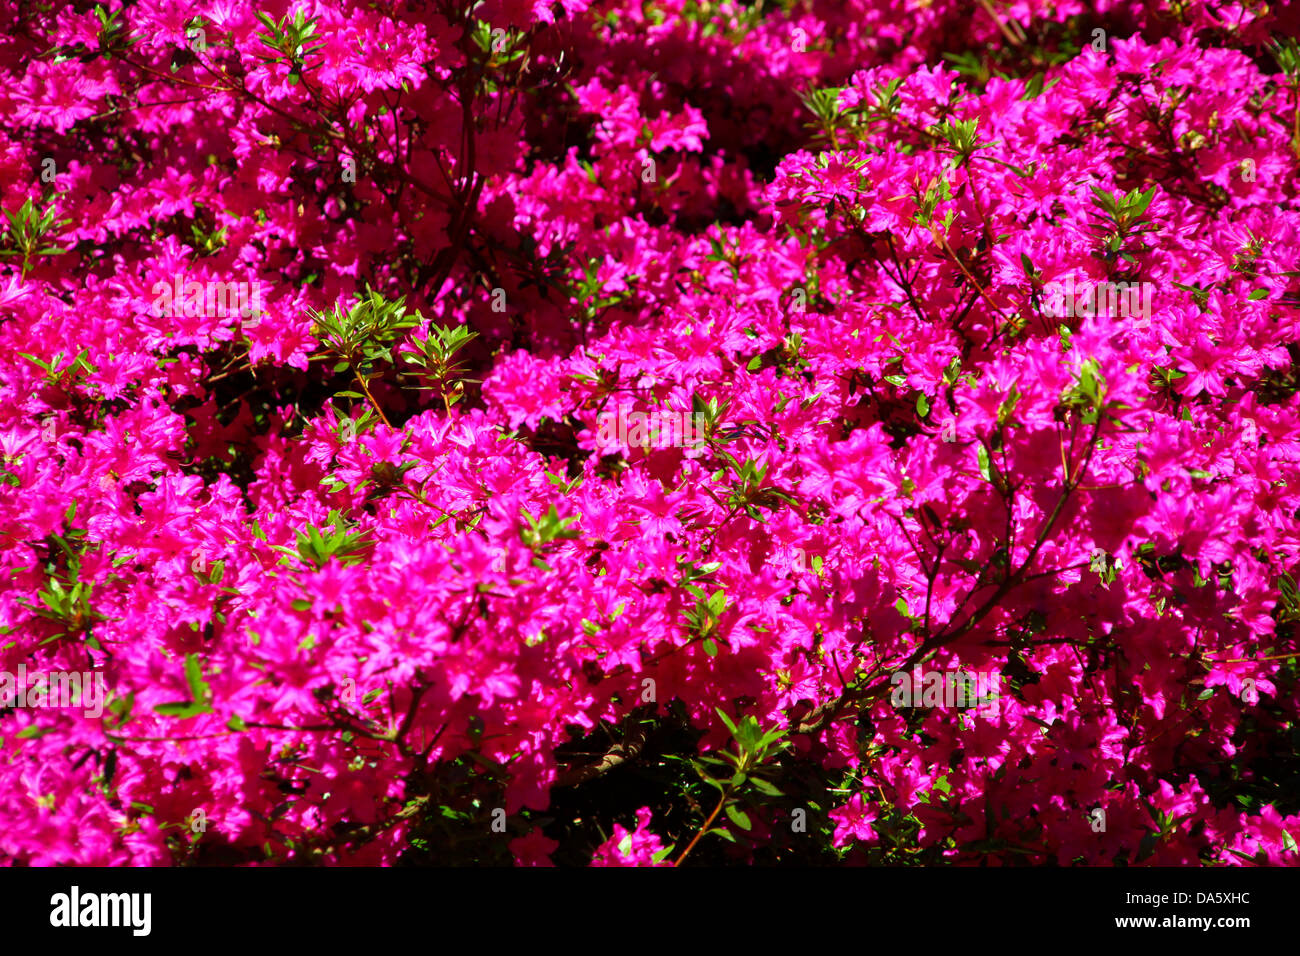 Bright pink purple flowering shrub bush Stock Photo